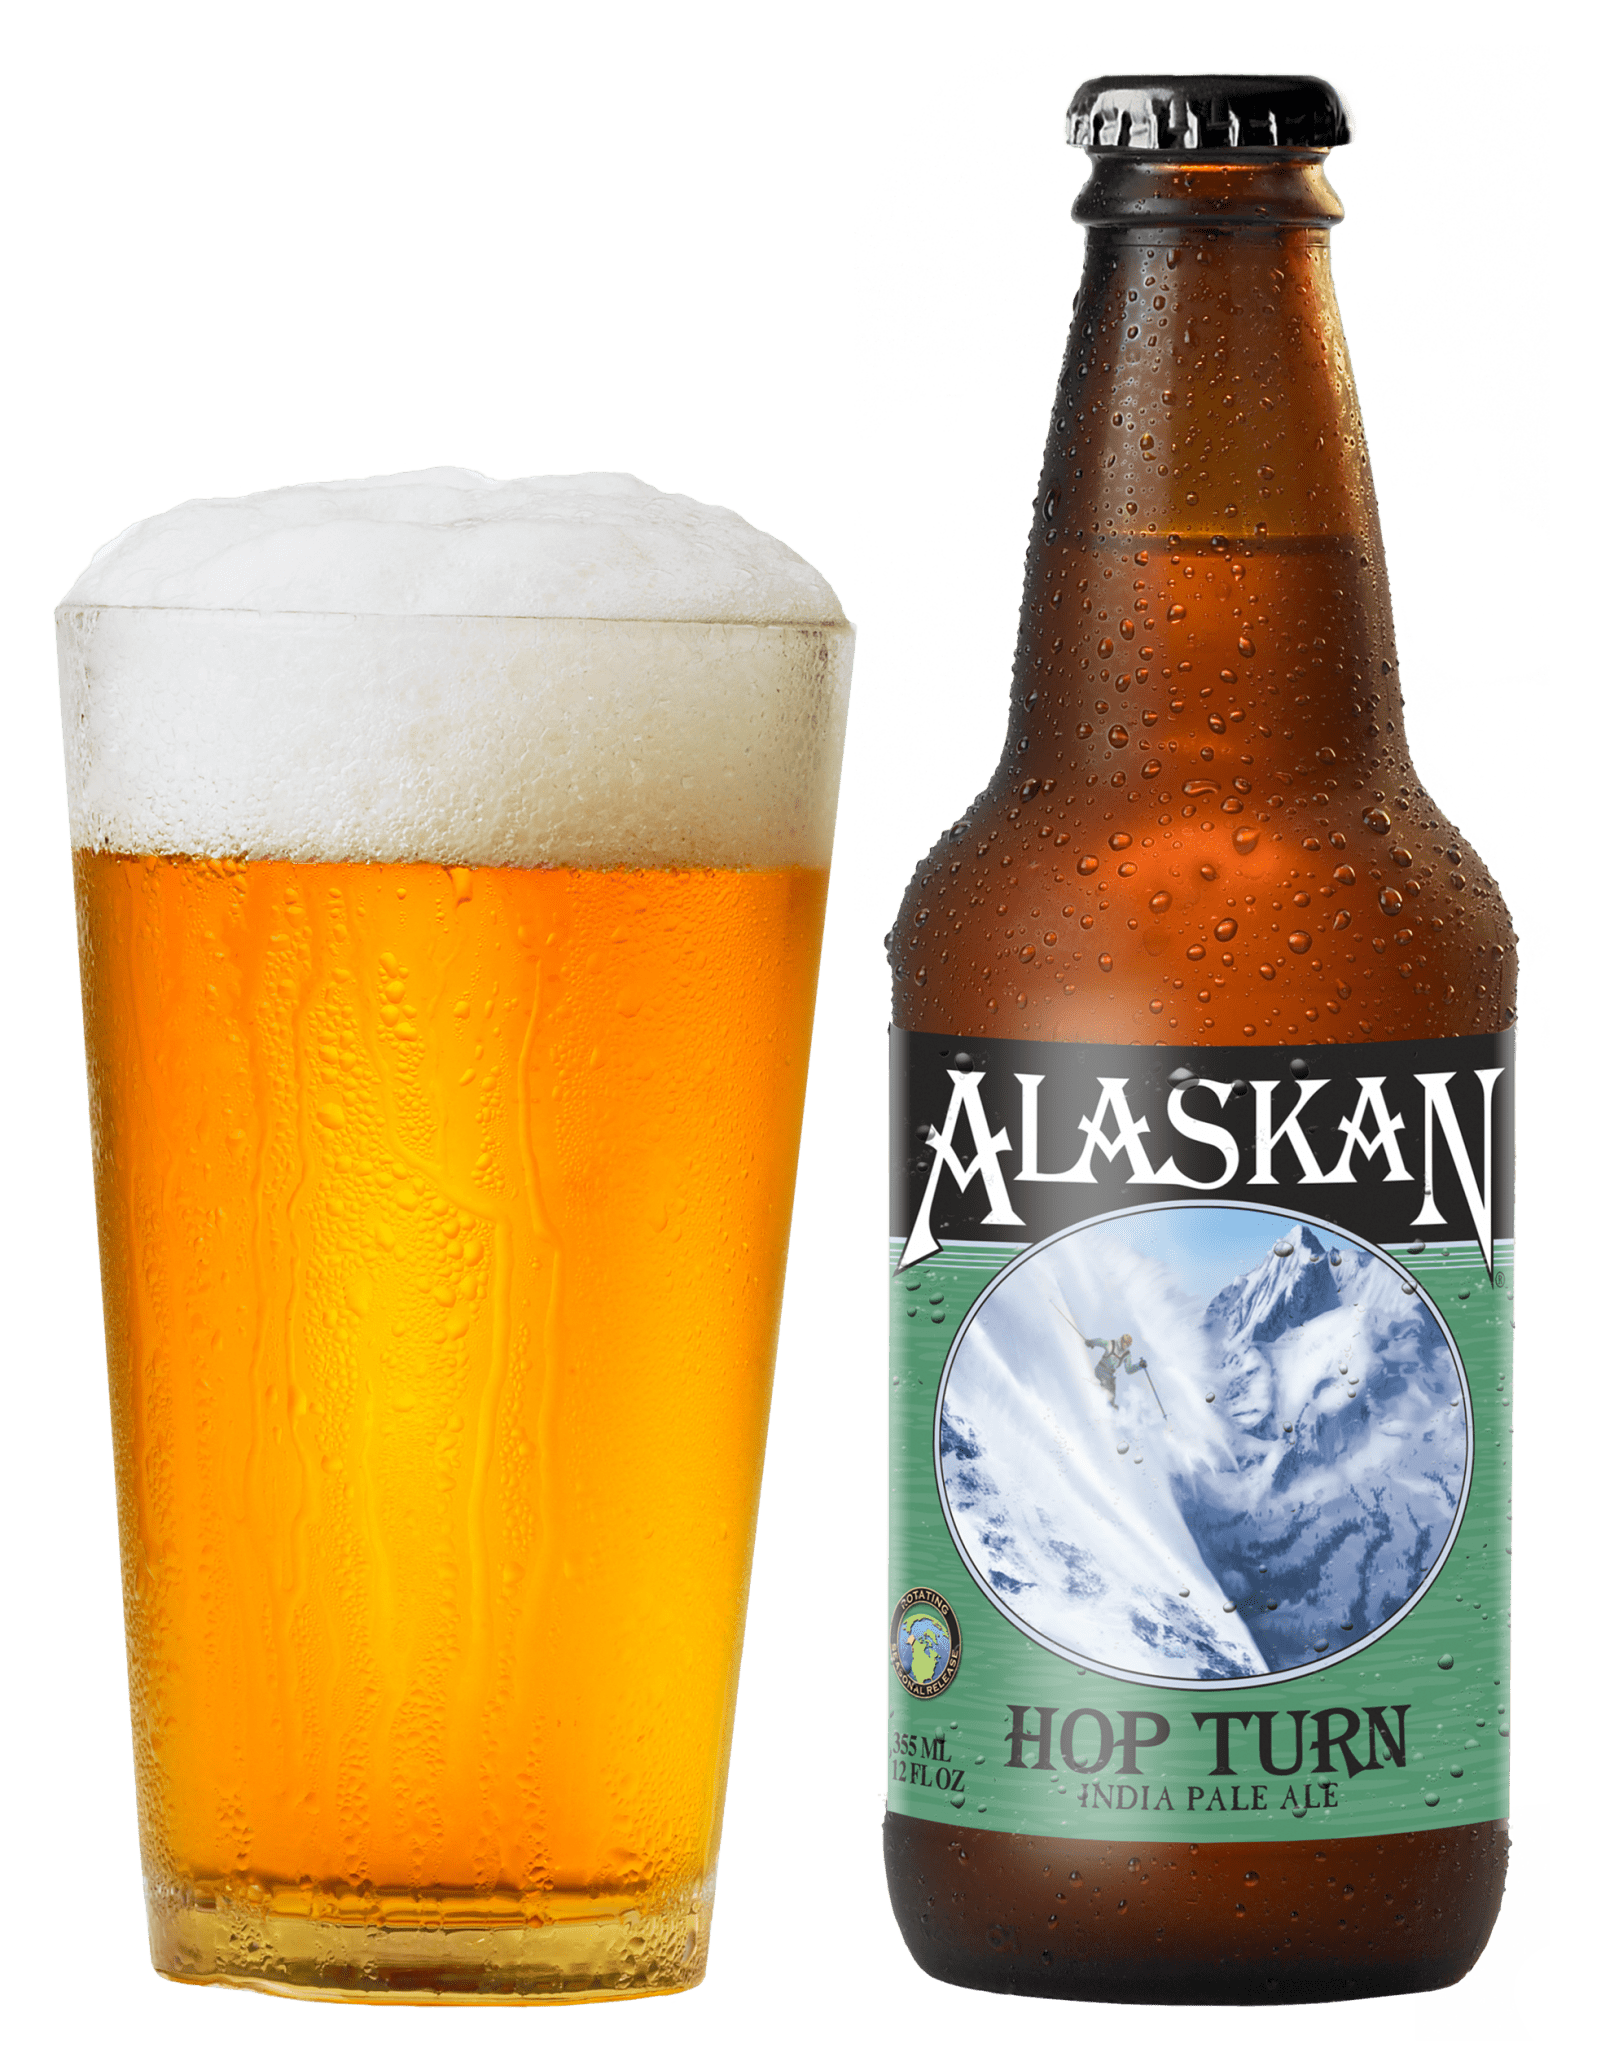 Alaskan hop turn